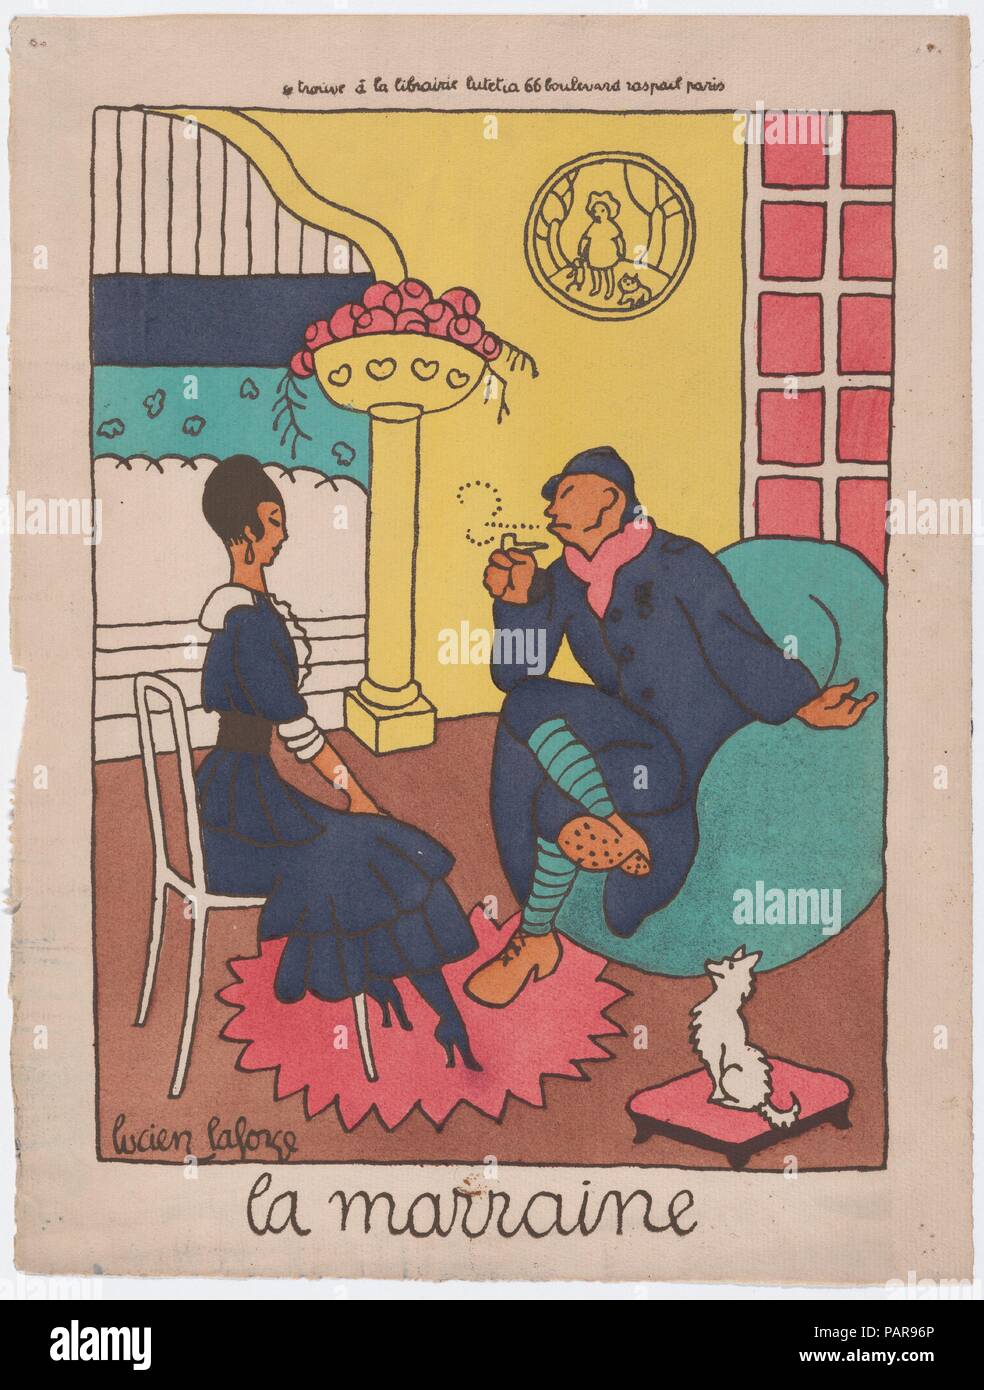 La marraine. Artist: Lucien Laforge (French, Paris 1889-1952 Paris). Dimensions: Image: 10 1/4 × 7 11/16 in. (26 × 19.5 cm)  Sheet: 12 1/2 × 9 3/16 in. (31.8 × 23.3 cm). Date: n.d.. Museum: Metropolitan Museum of Art, New York, USA. Stock Photo